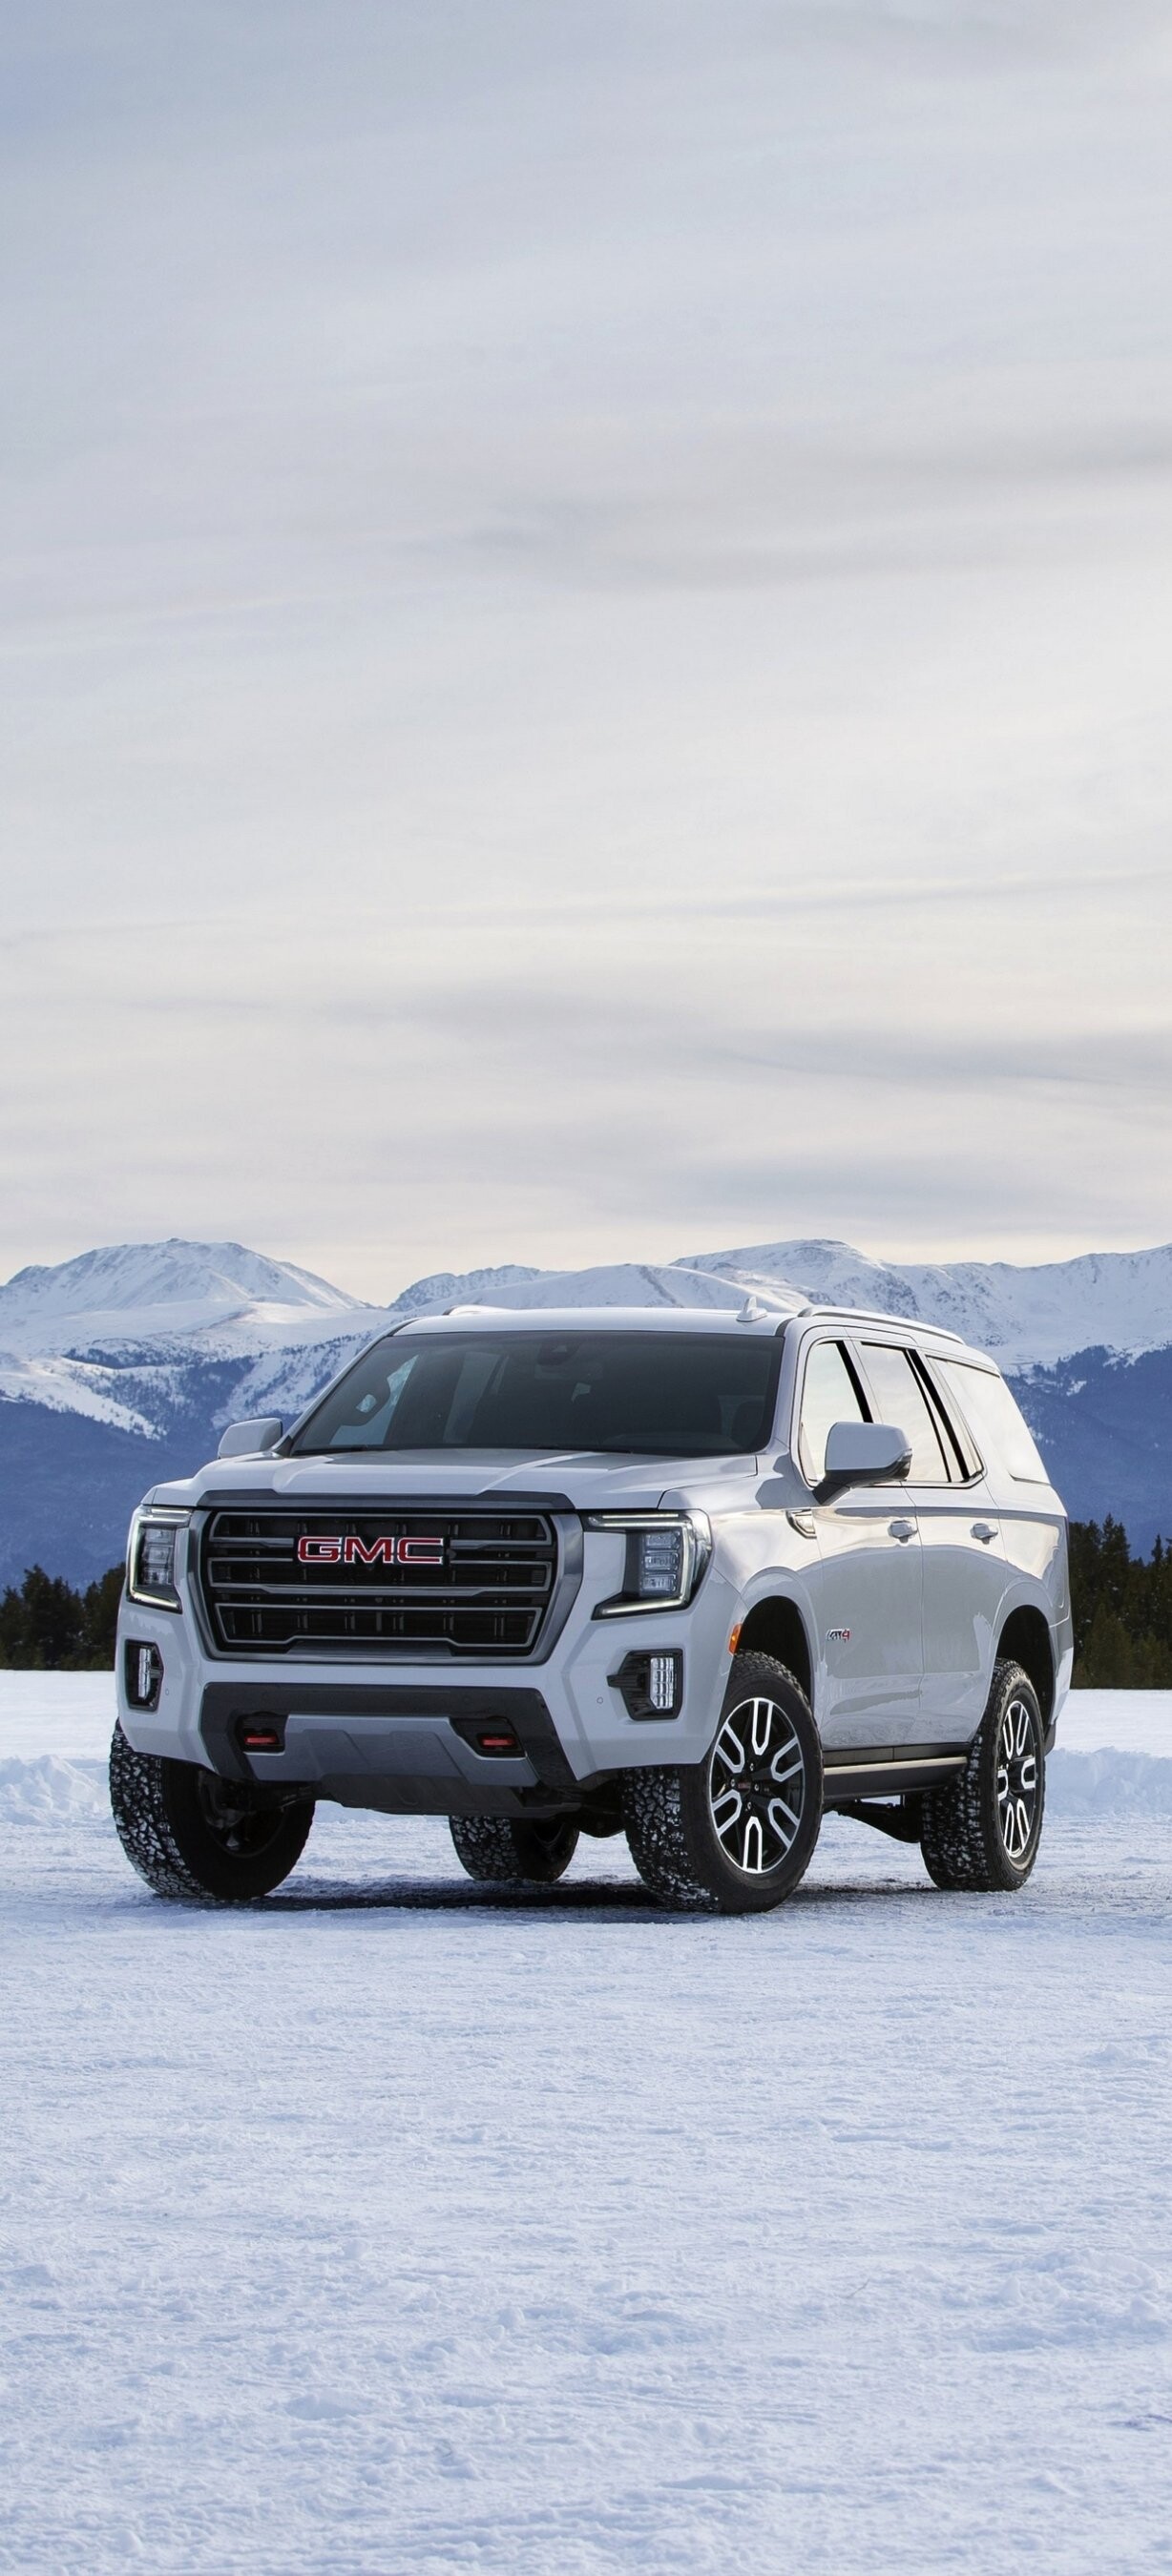 GMC: Yukon Denali, Four-wheel-drive trucks, Off-road capability. 1230x2700 HD Background.